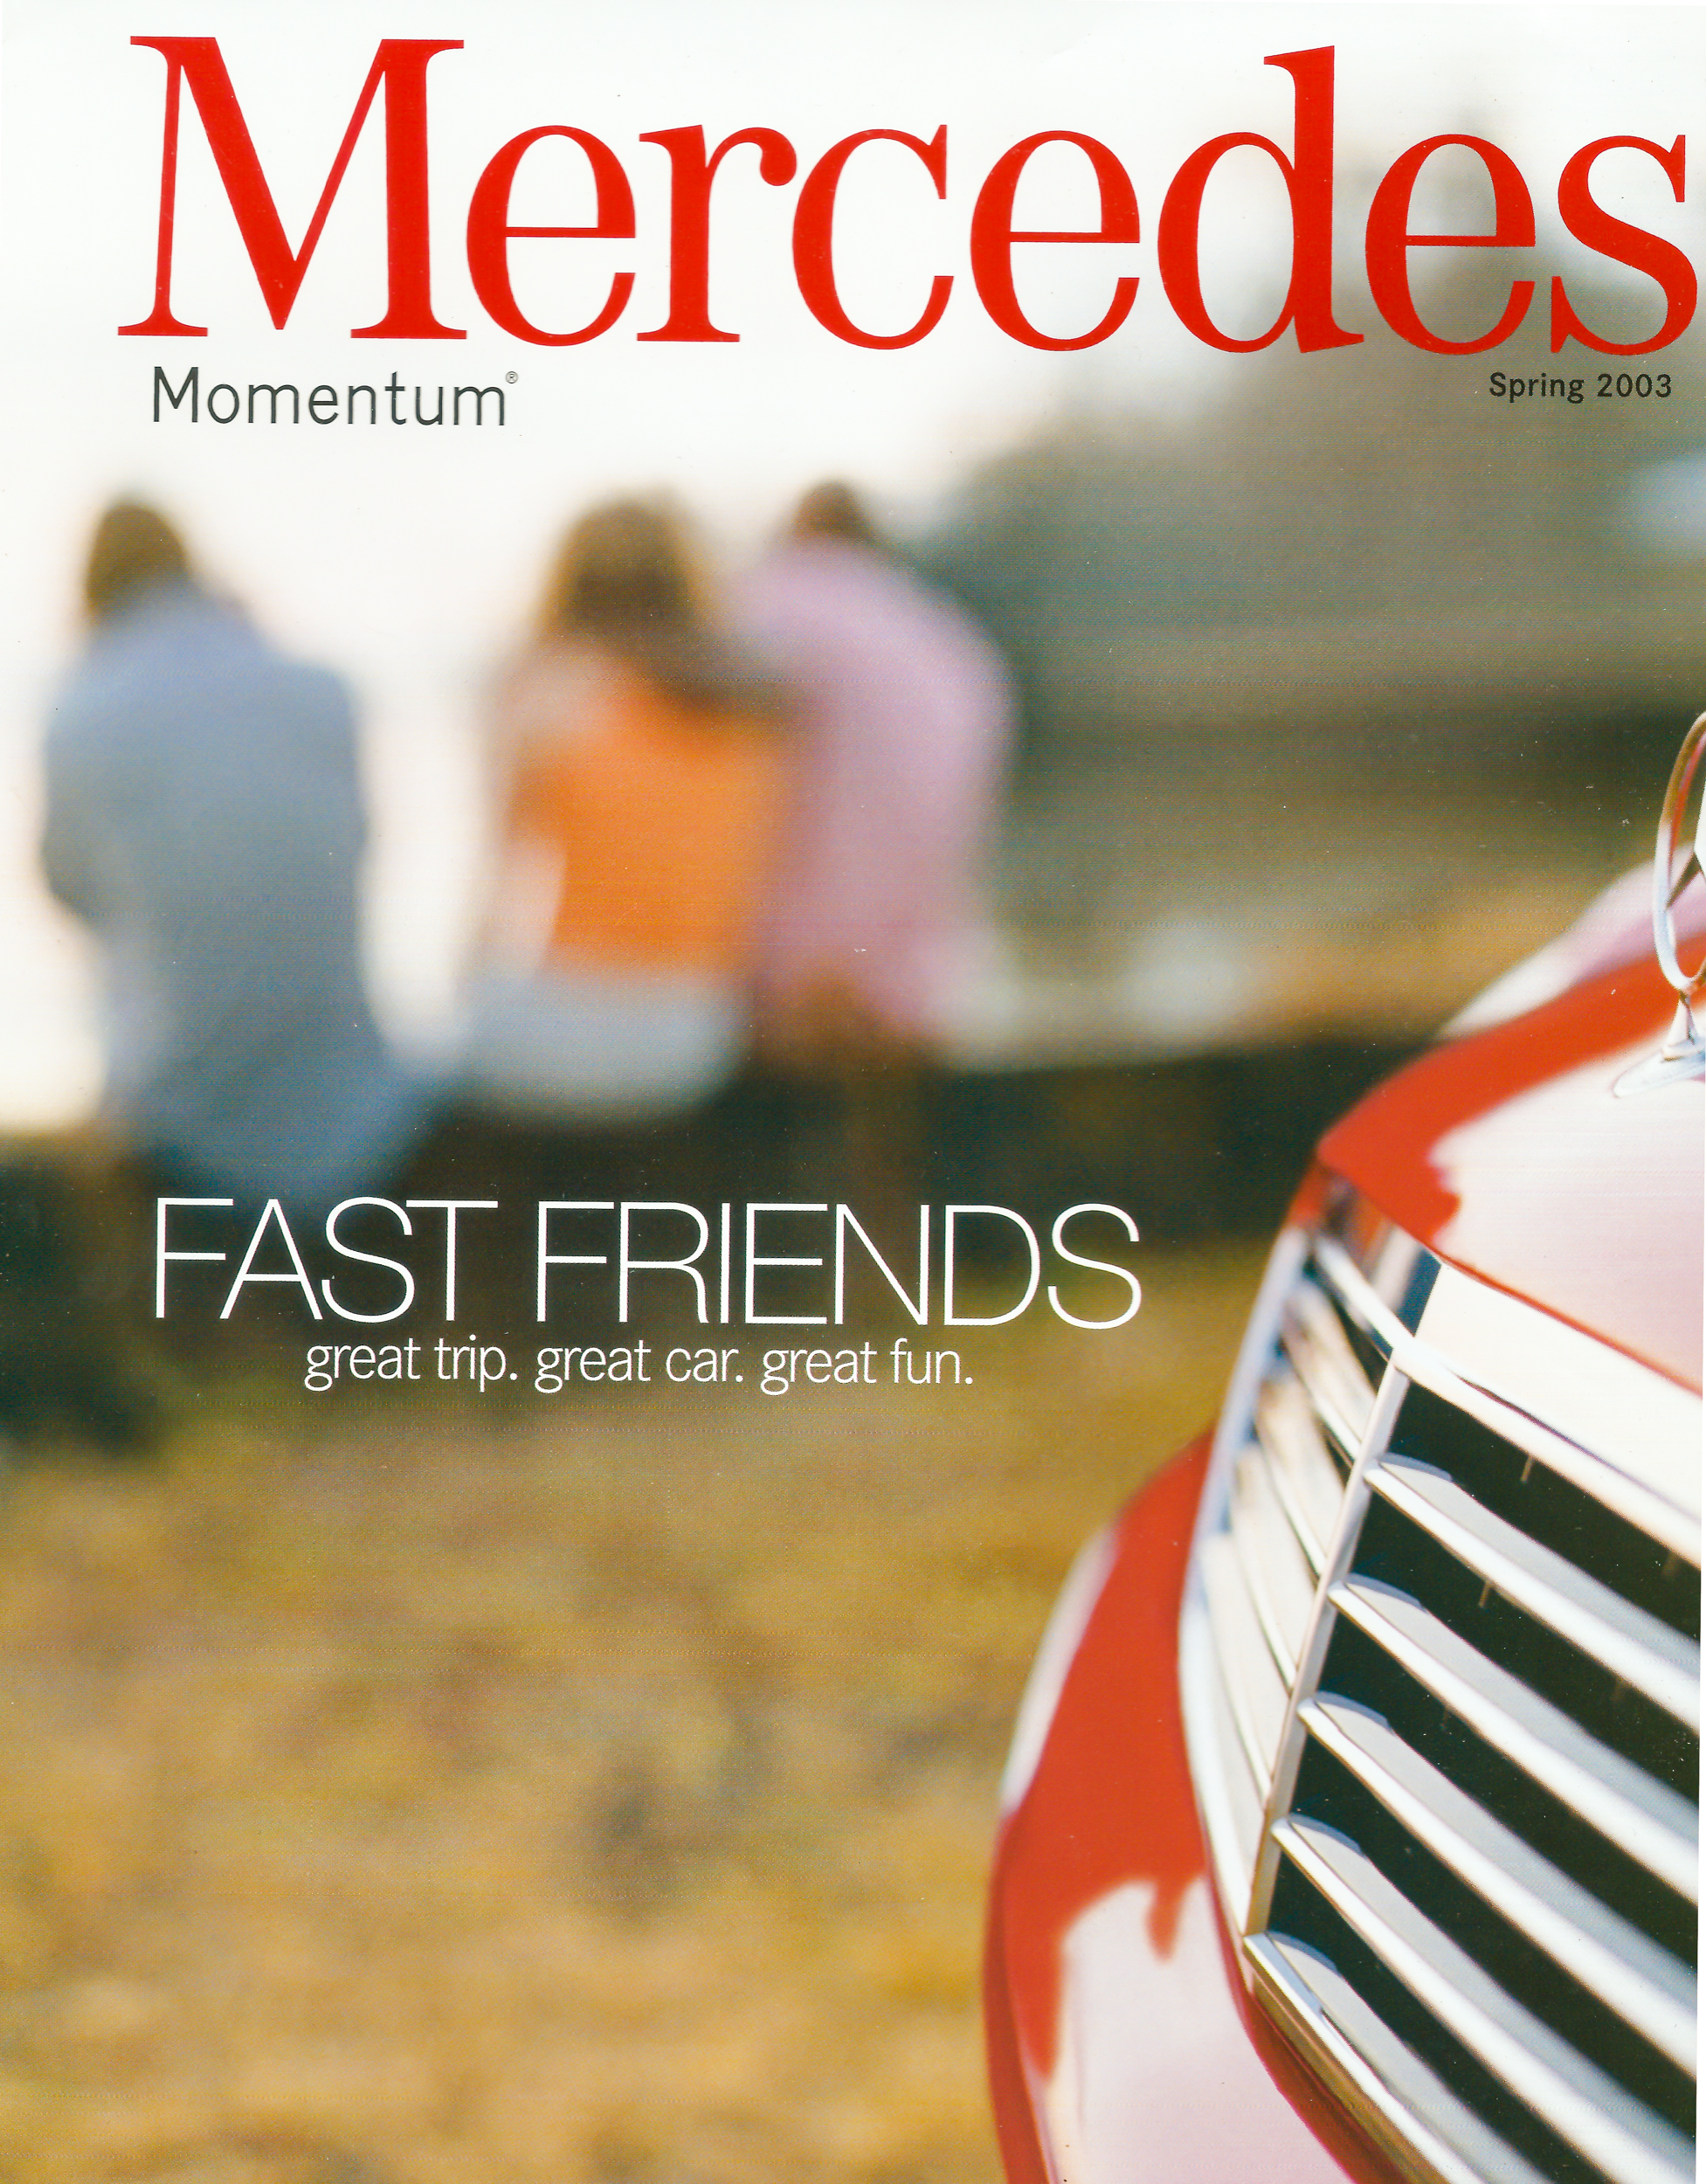 Mercedes magazine